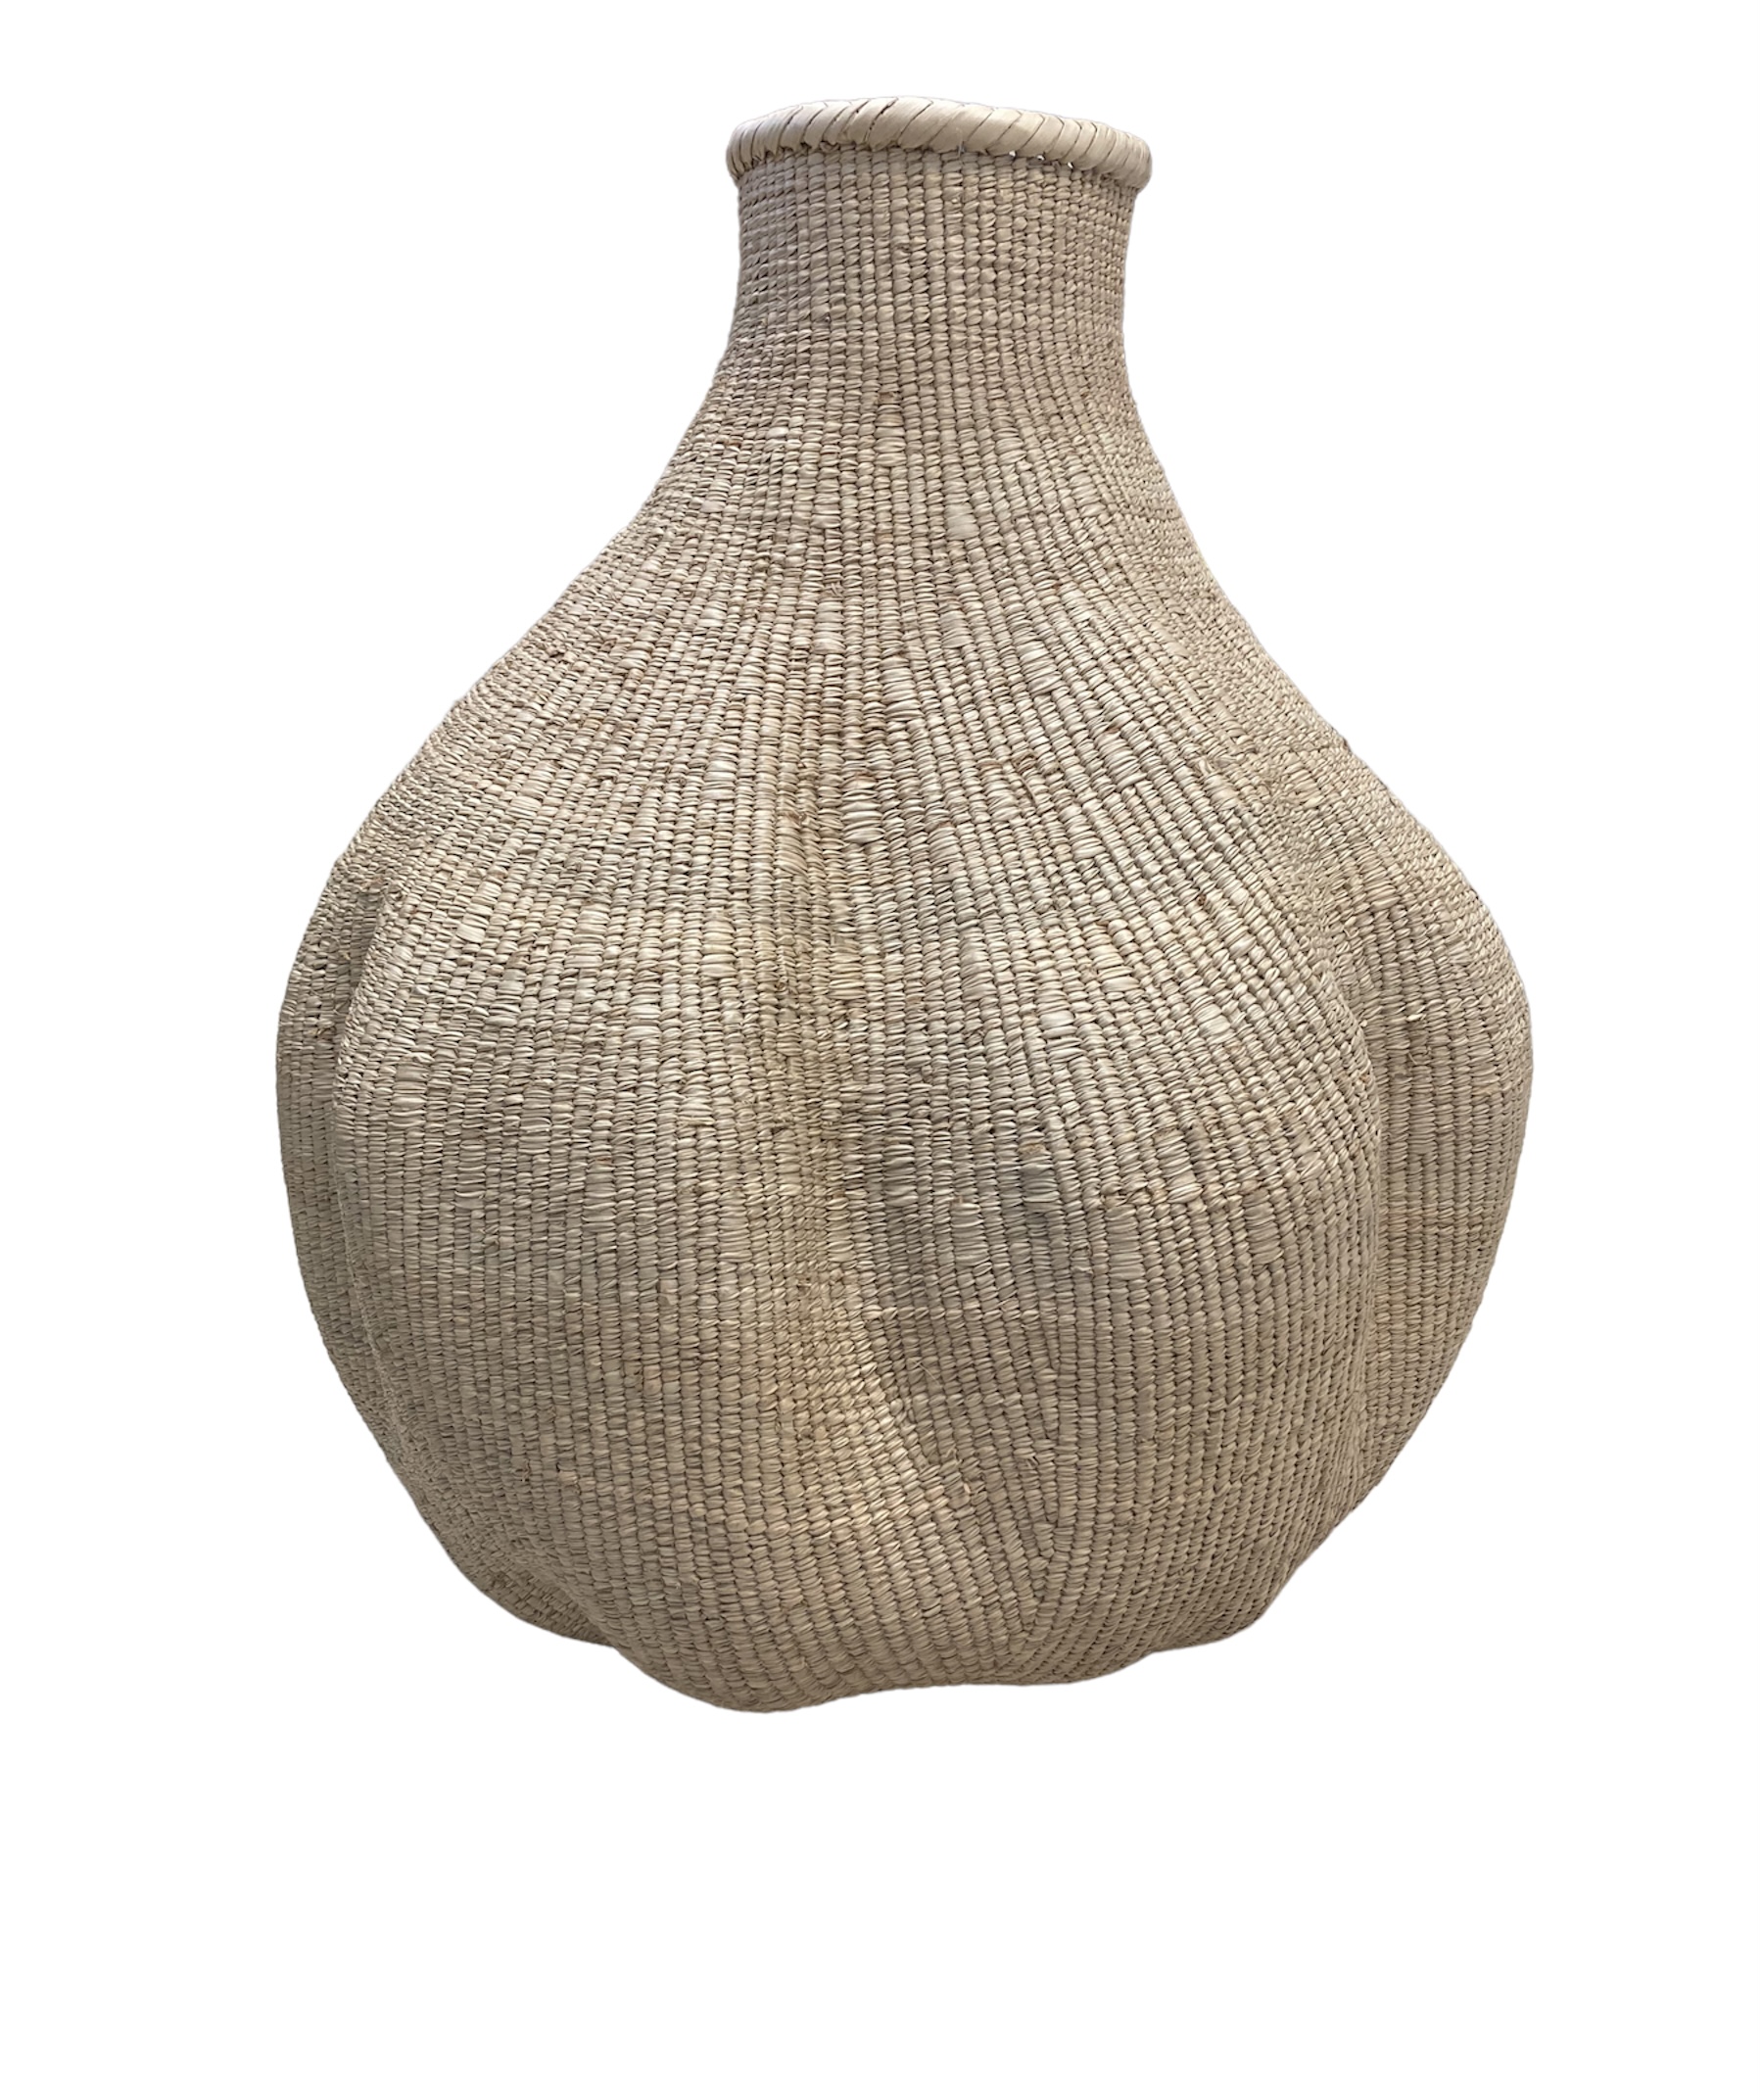 Garlic Gourd Basket from Zimbabwe : 17" - 23" in height